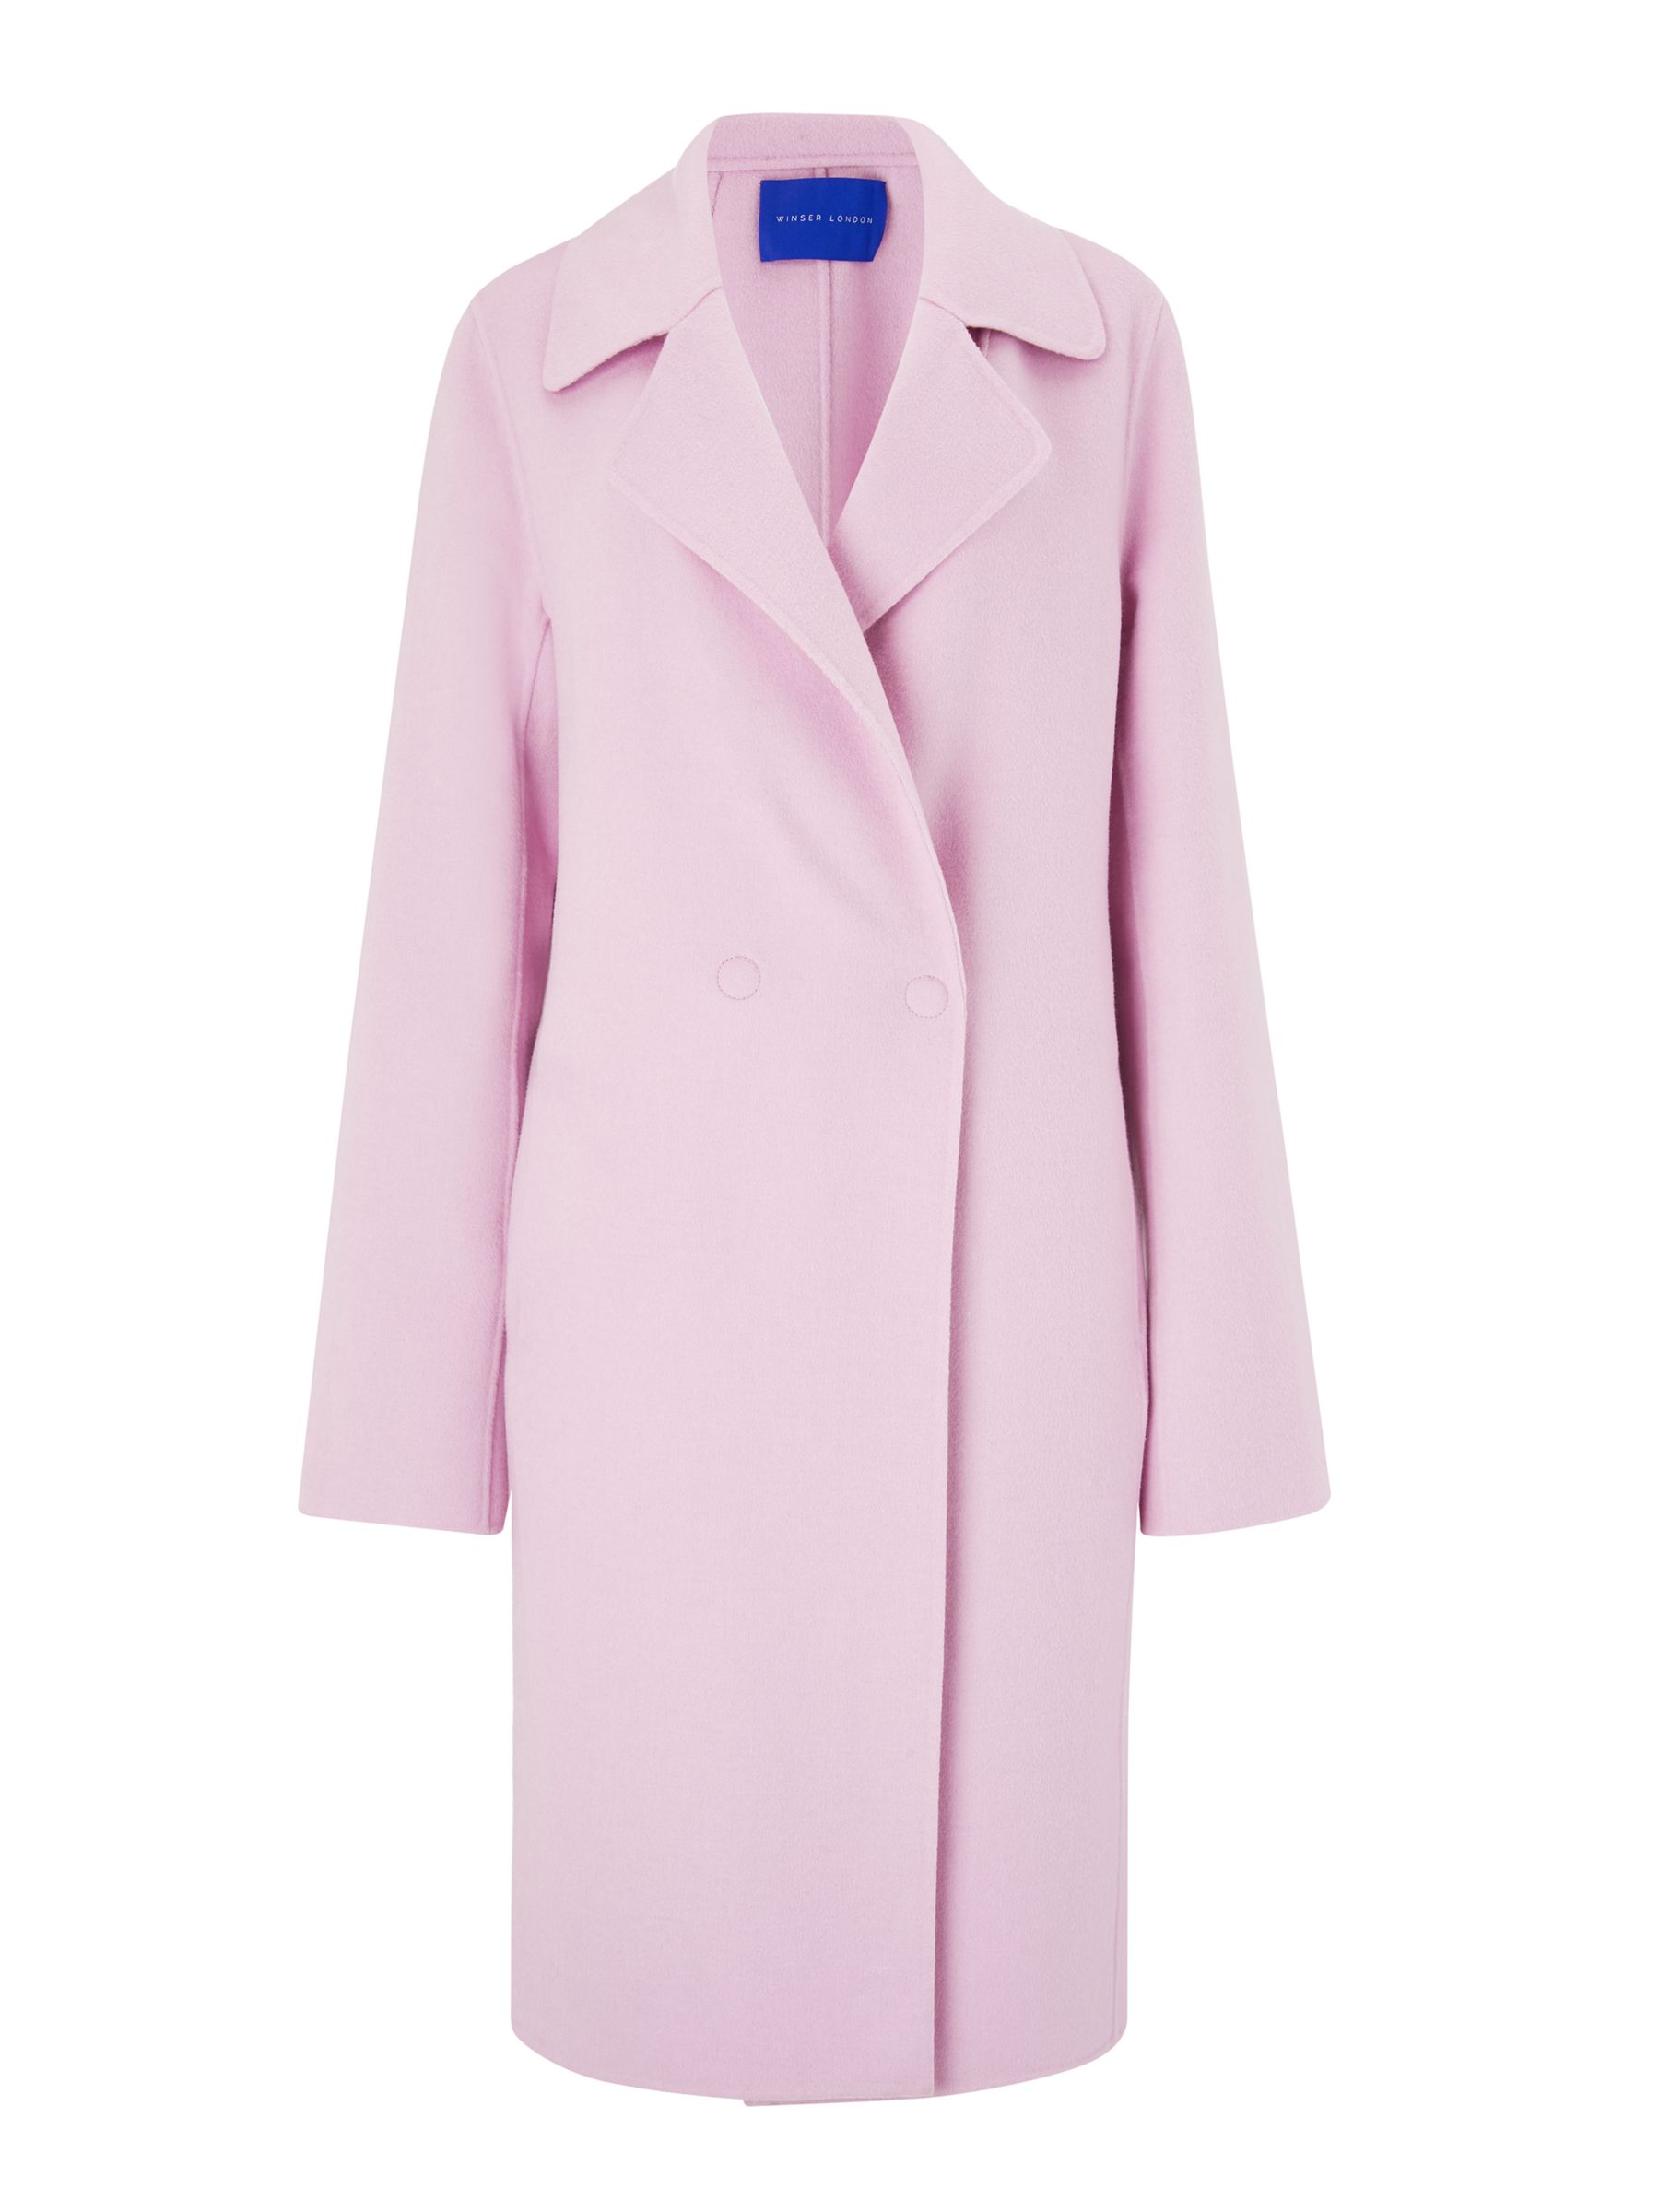 Winser London Lauren Wool Blend Coat, Lavender Pink at John Lewis ...